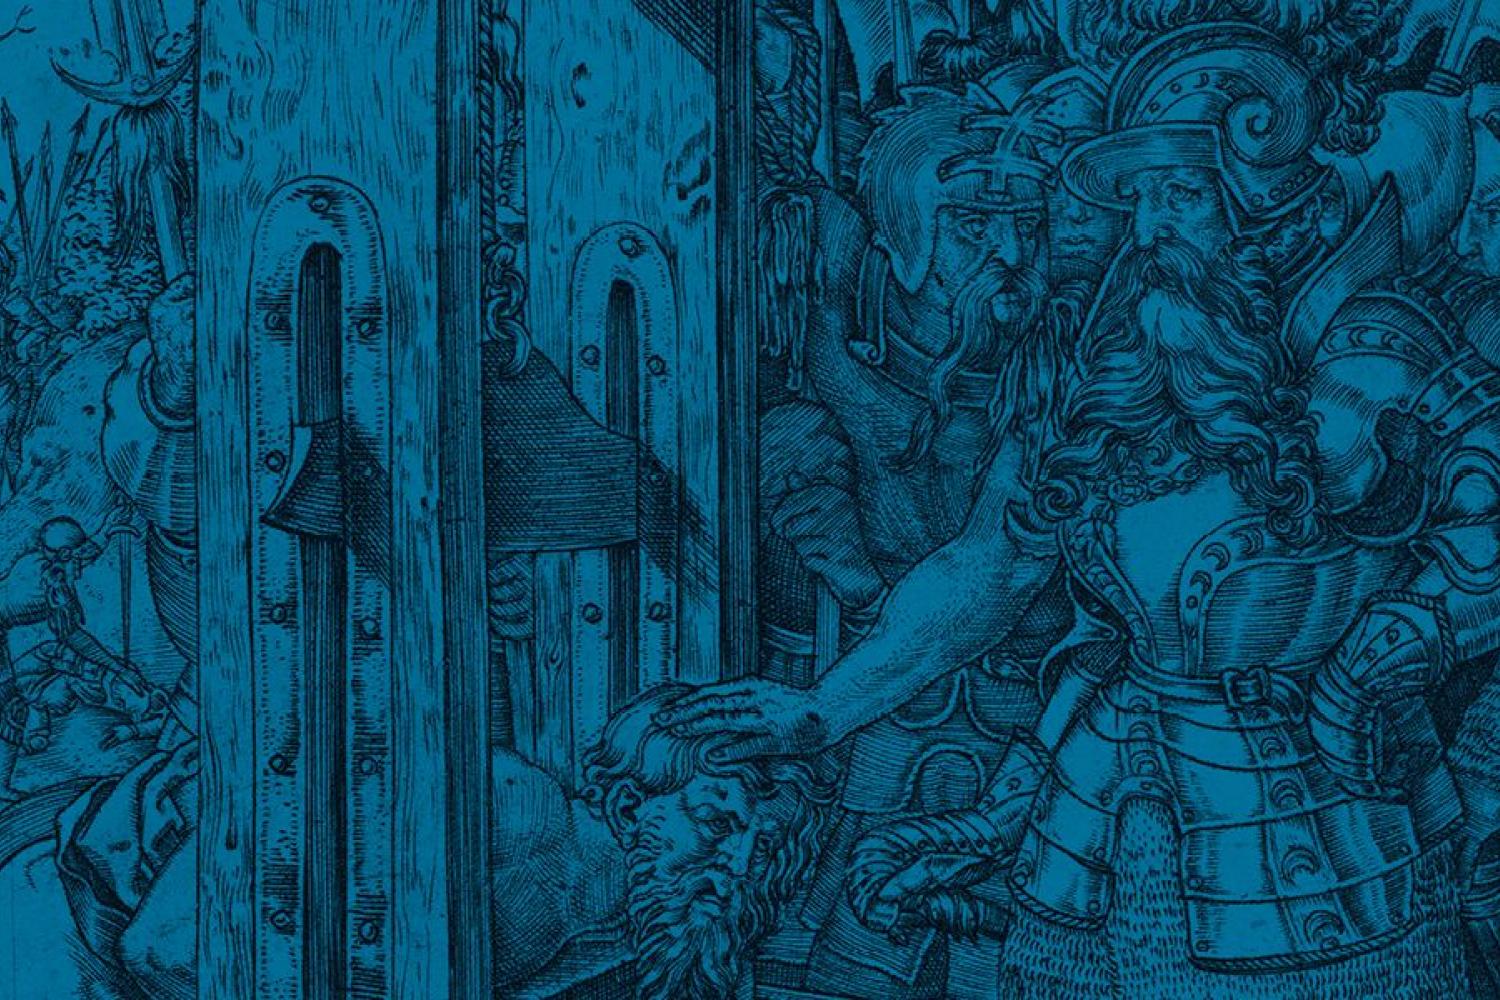 Heinrich Aldegrever, Tit. Manlius fi lium sine ejus jussu cum hoste pugnantem obtuncavit, 1553. Collection Robert Badinter, photographie -  - © Bertrand Huet